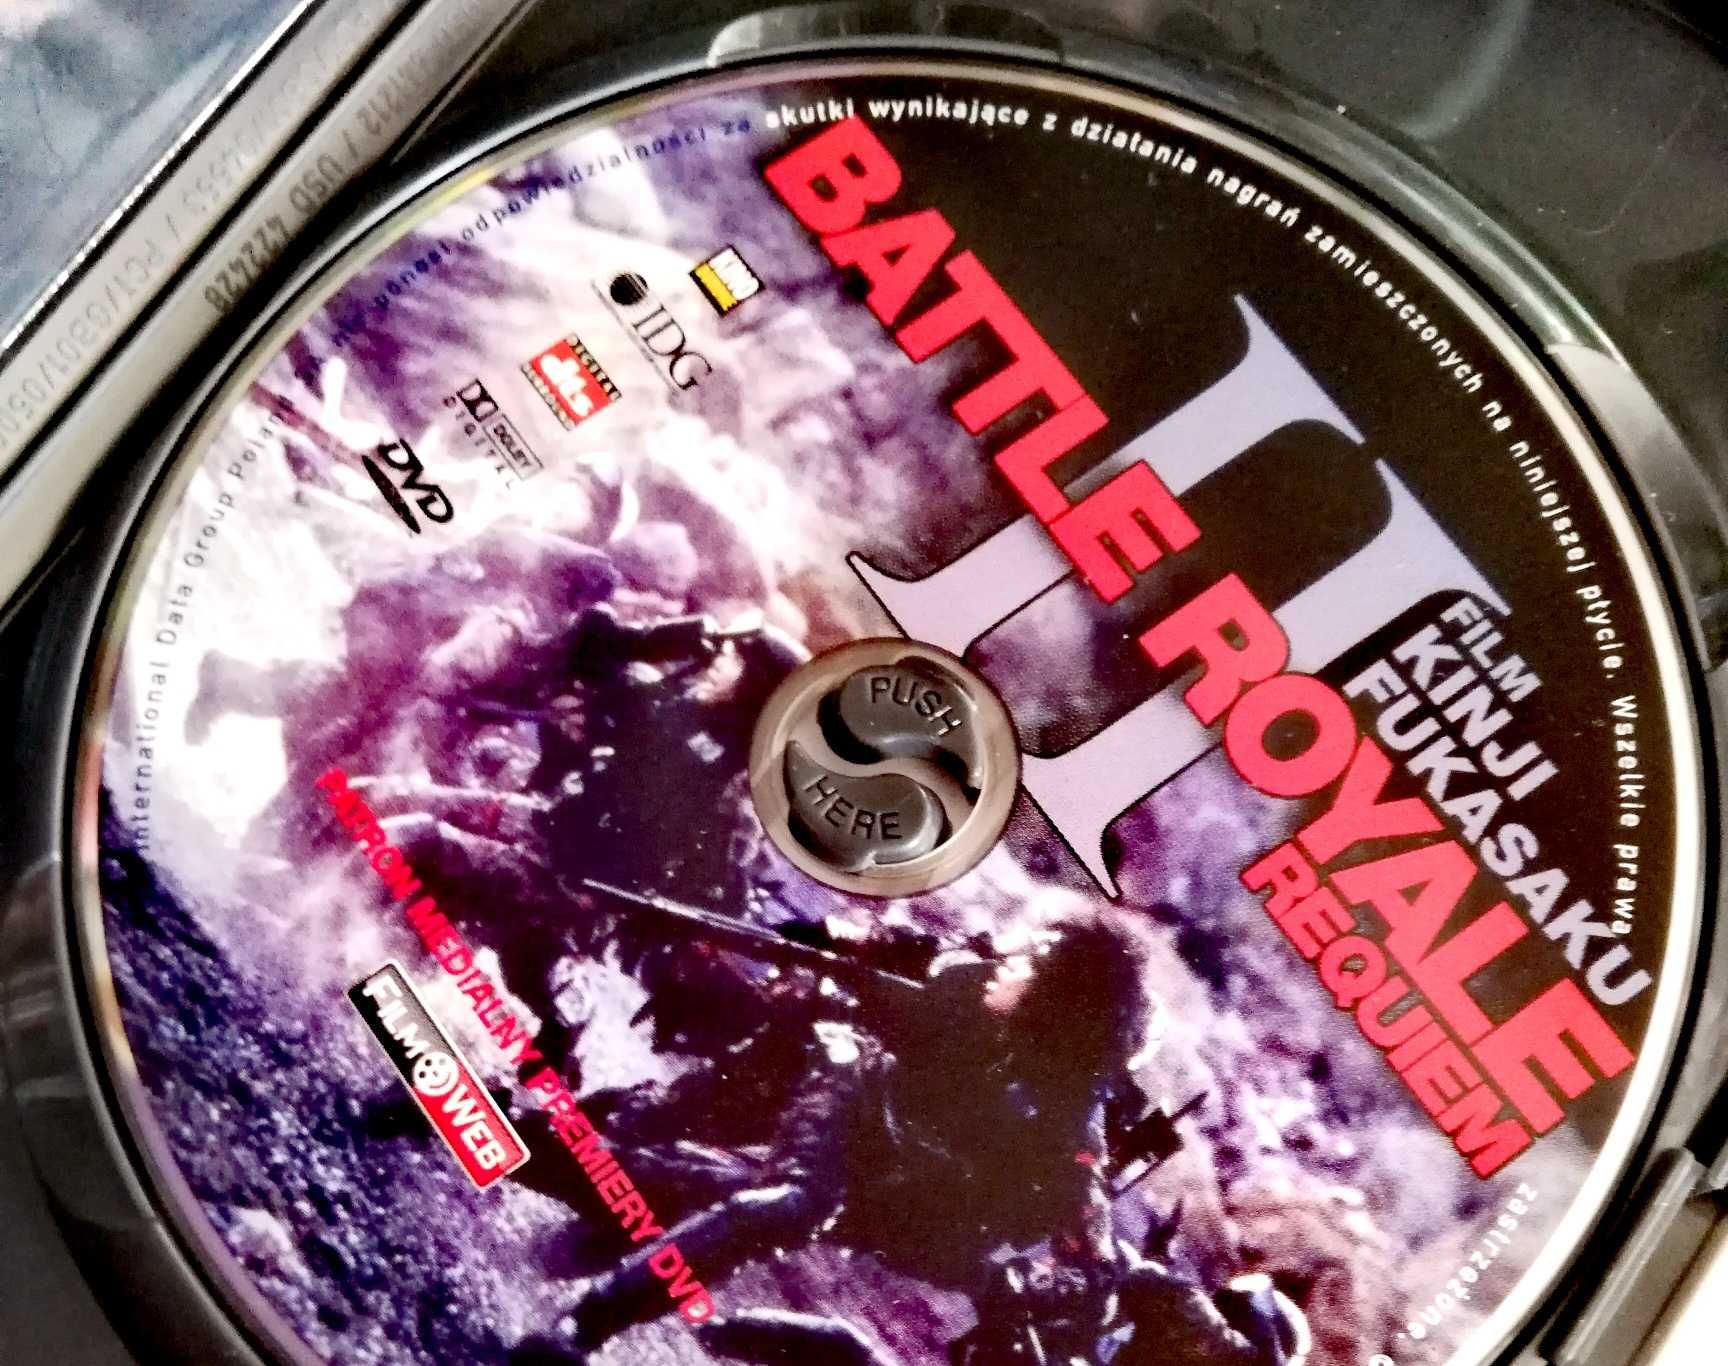 Battle Royale 2 Requiem japoński film na dvd polska wersja